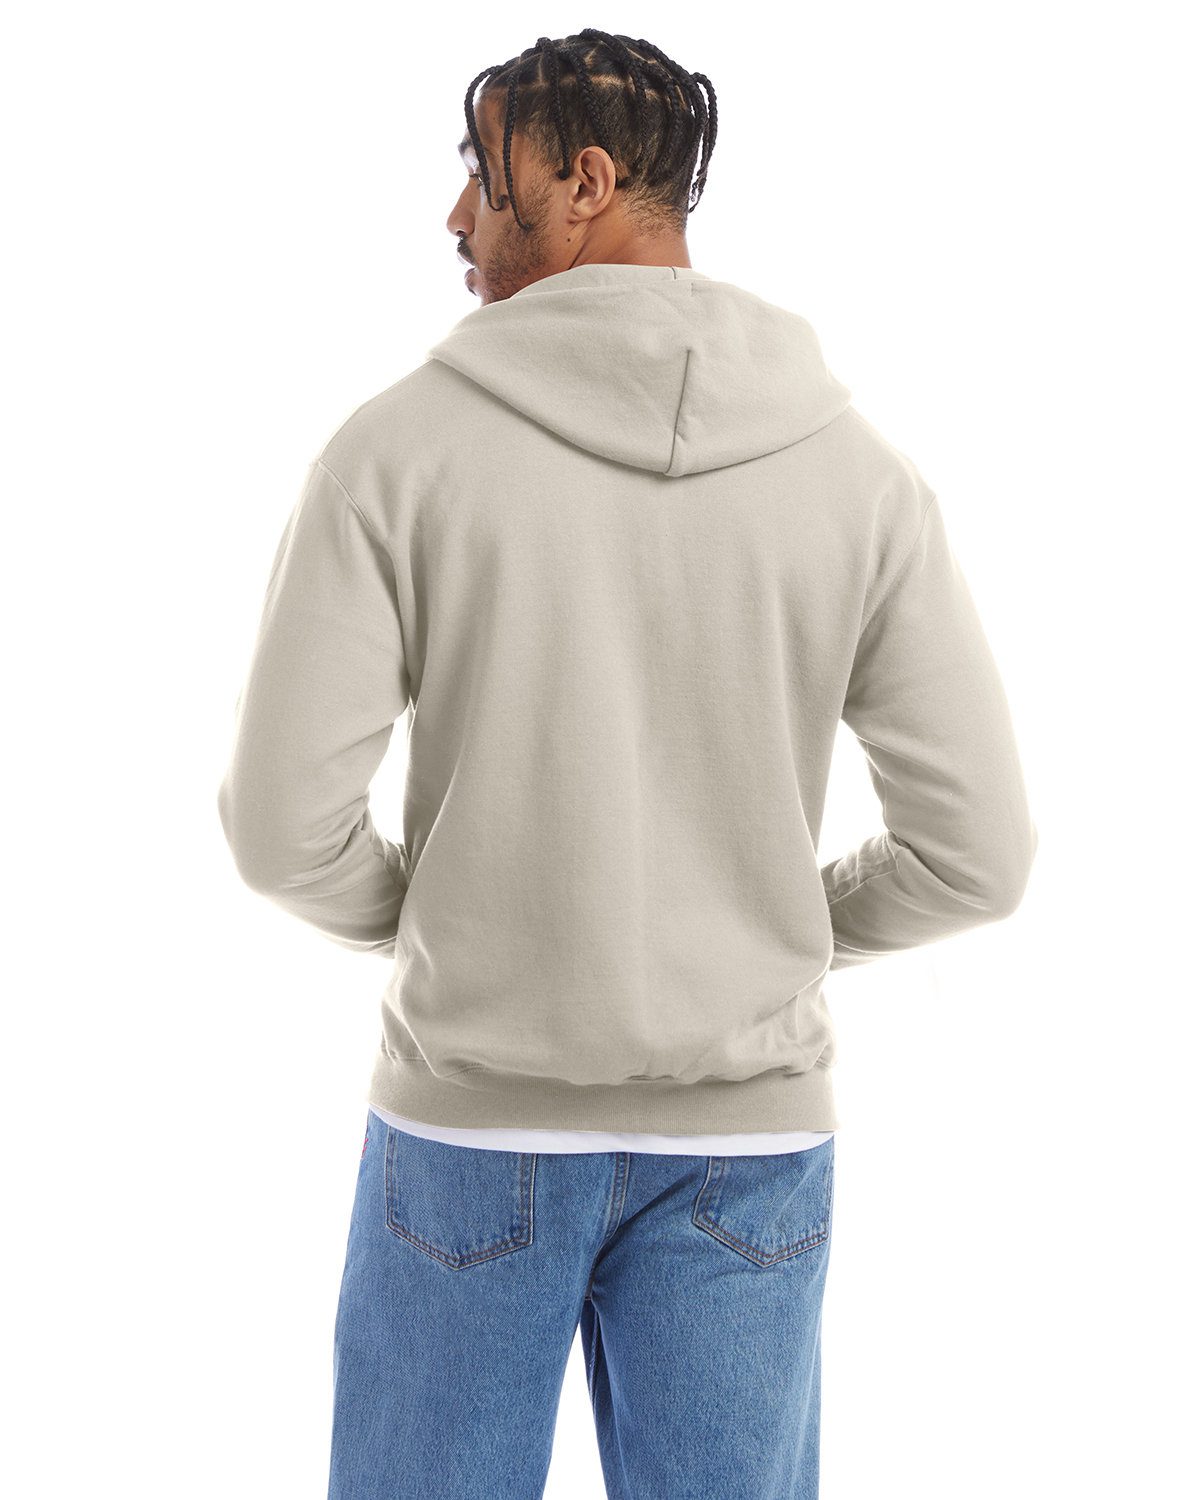 Champion Adult Powerblend® Full-Zip Hooded Sweatshirt #S800 Sand Back